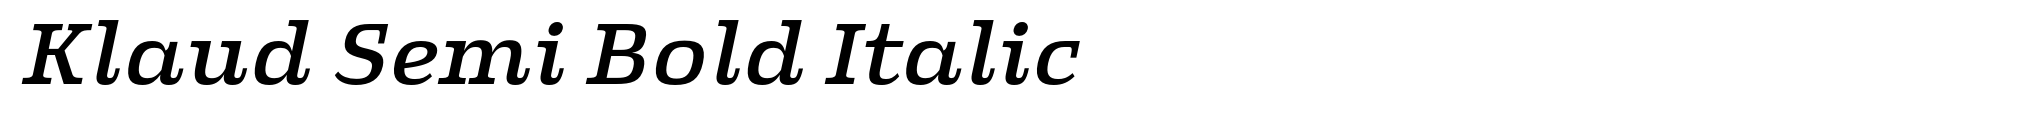 Klaud Semi Bold Italic image